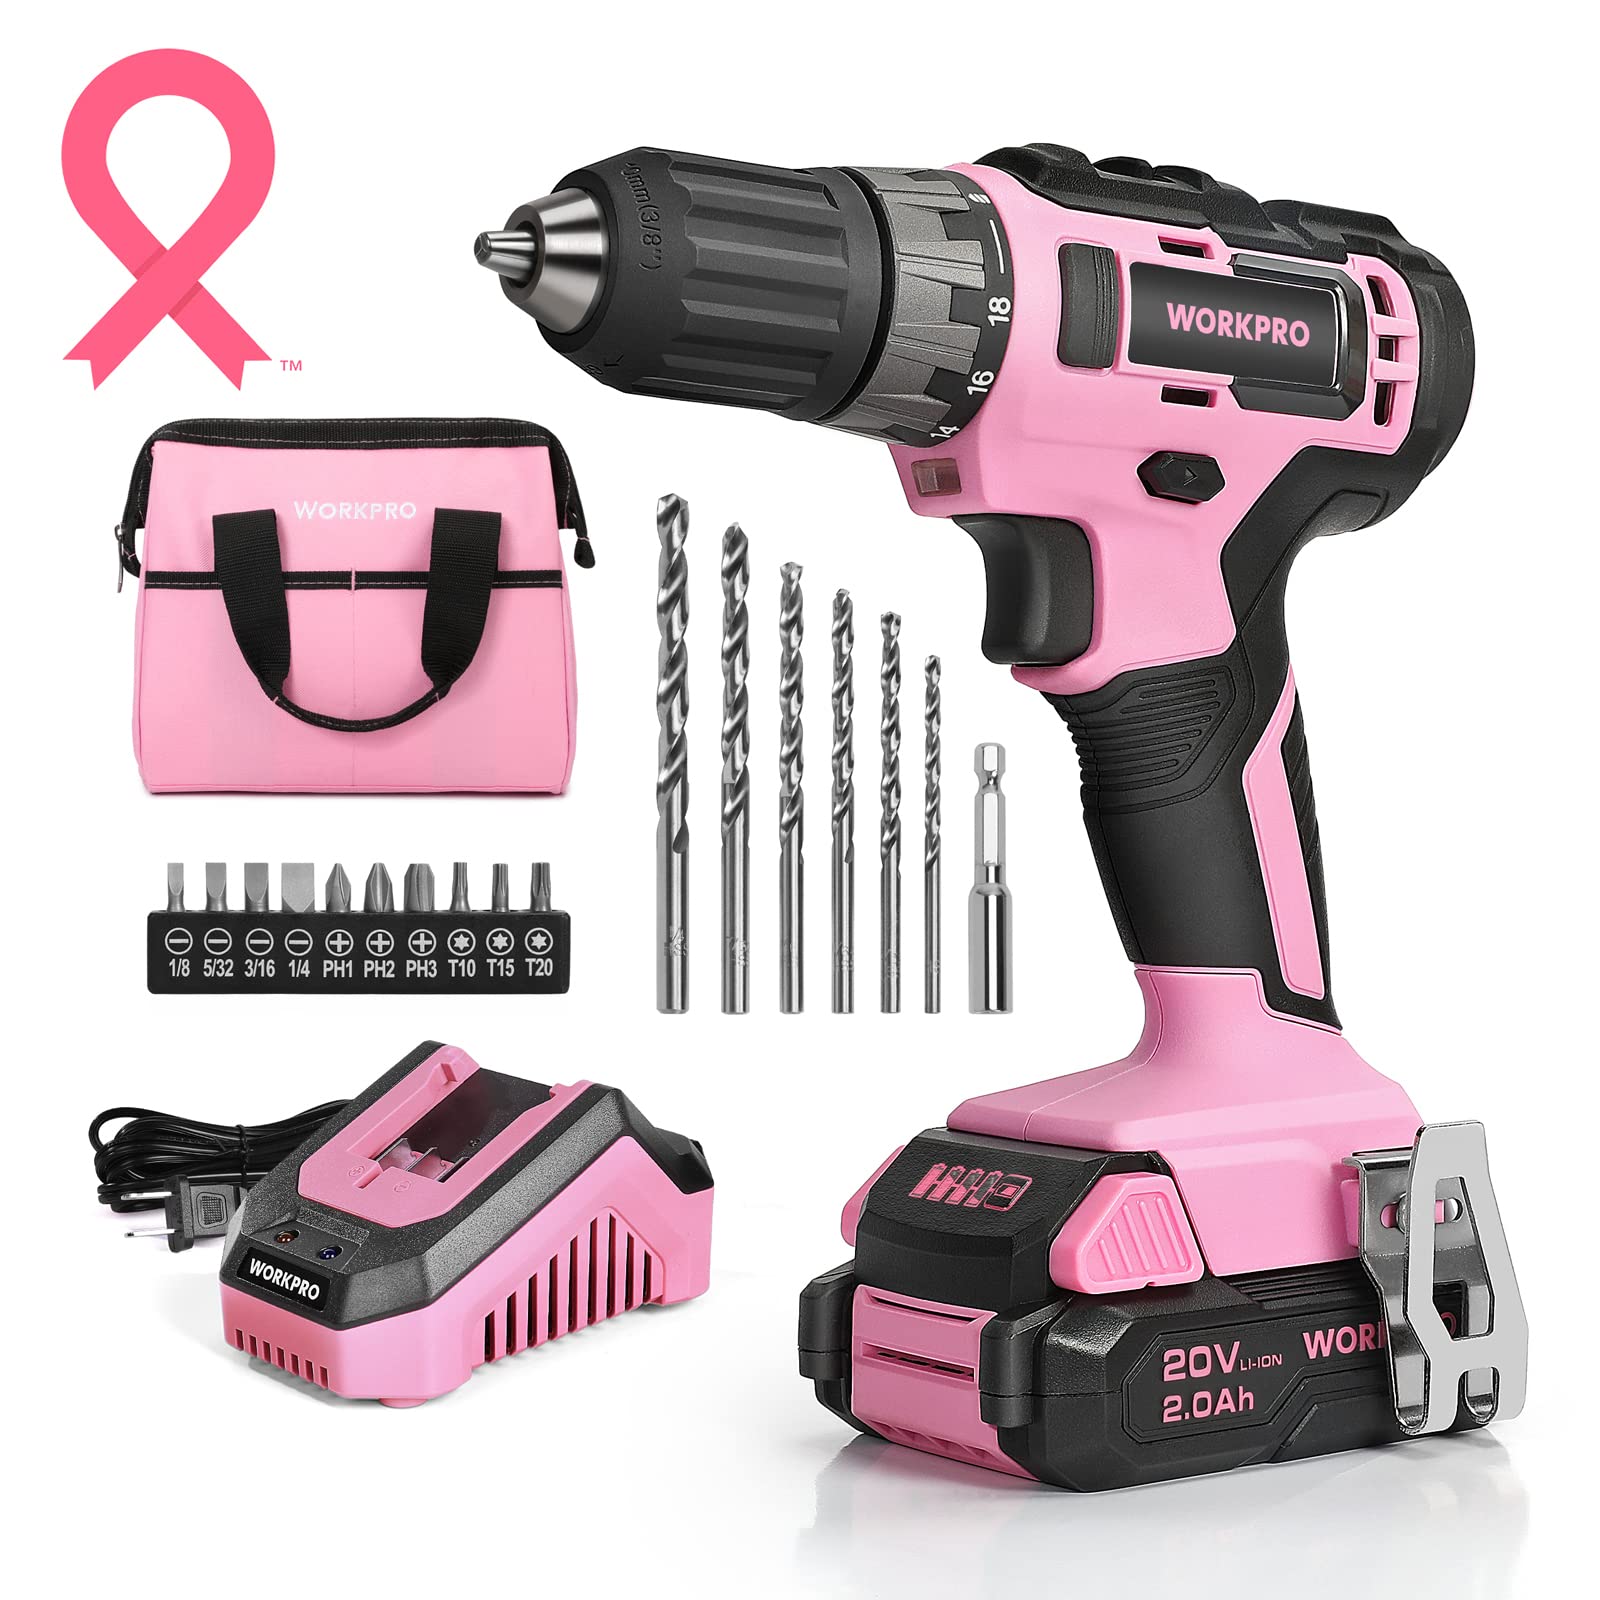 Mua WORKPRO 20V Pink Cordless Drill Driver Set, 3/8” Keyless Chuck, 2.0 Ah  Li-ion Battery, Hour Fast Charger and 11-inch Storage Bag Included trên  Amazon Mỹ chính hãng 2023 Giaonhan247